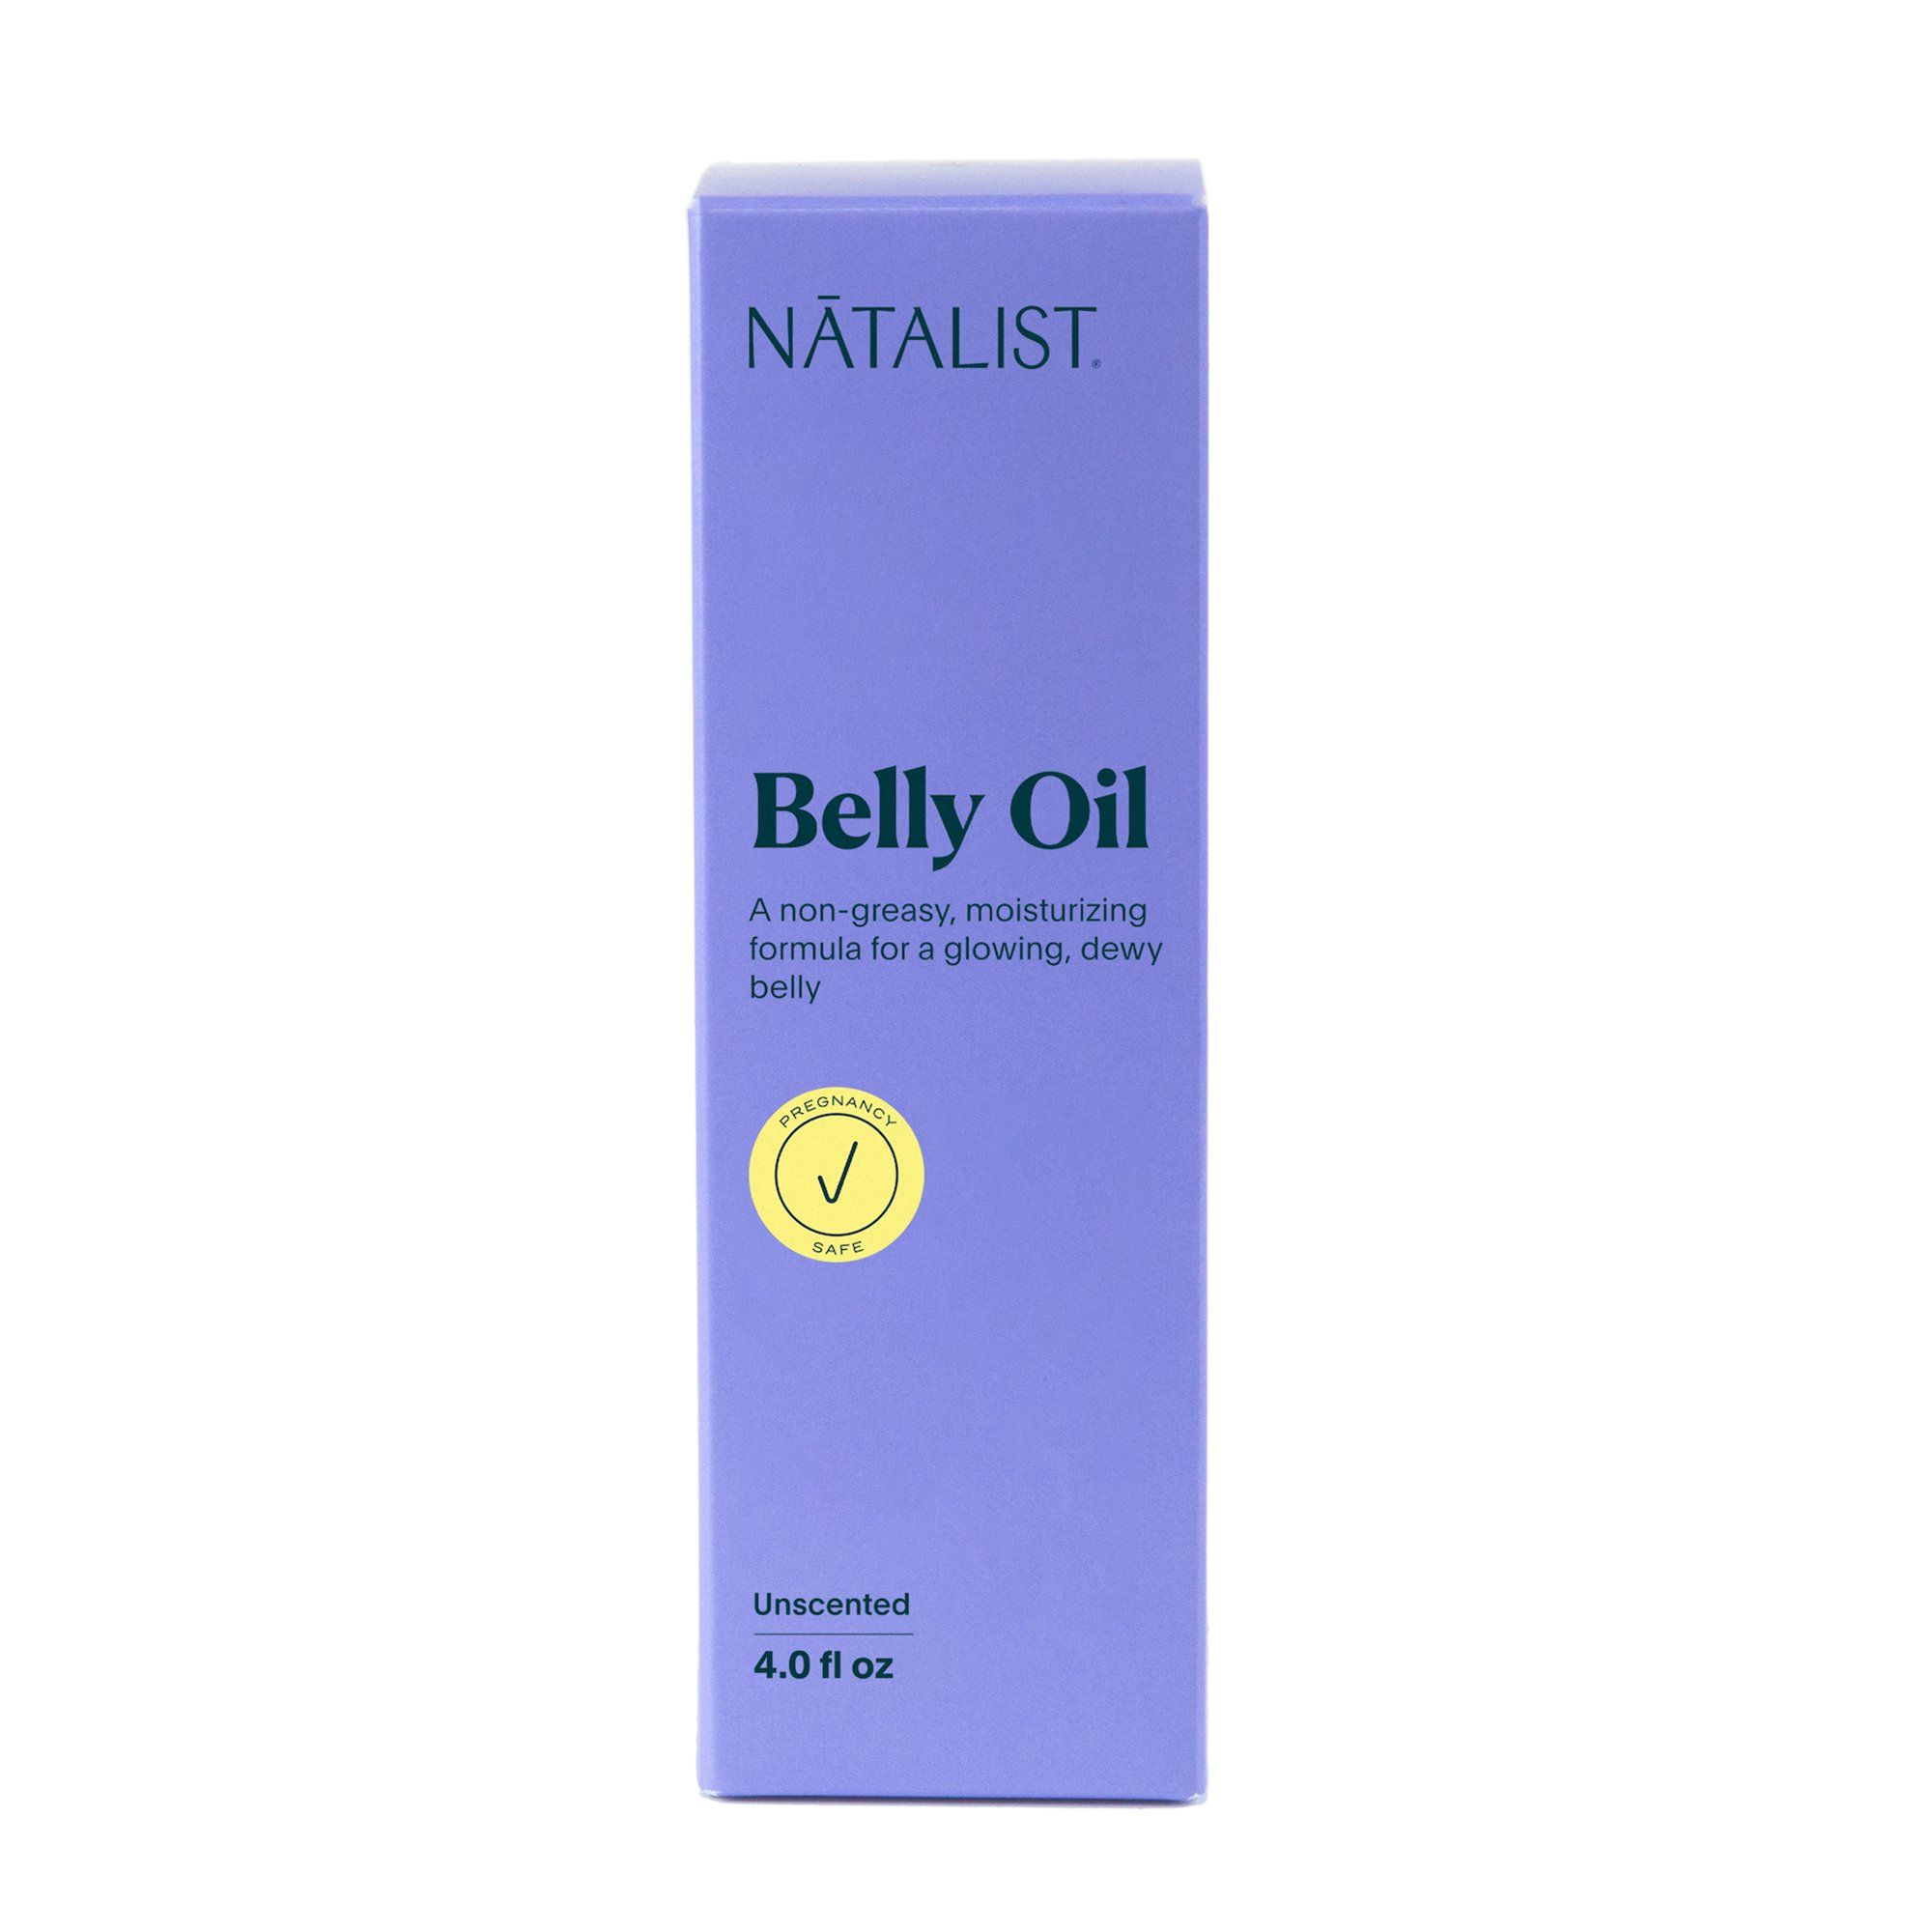 Natalist Belly Oil Pump - 4 fl oz